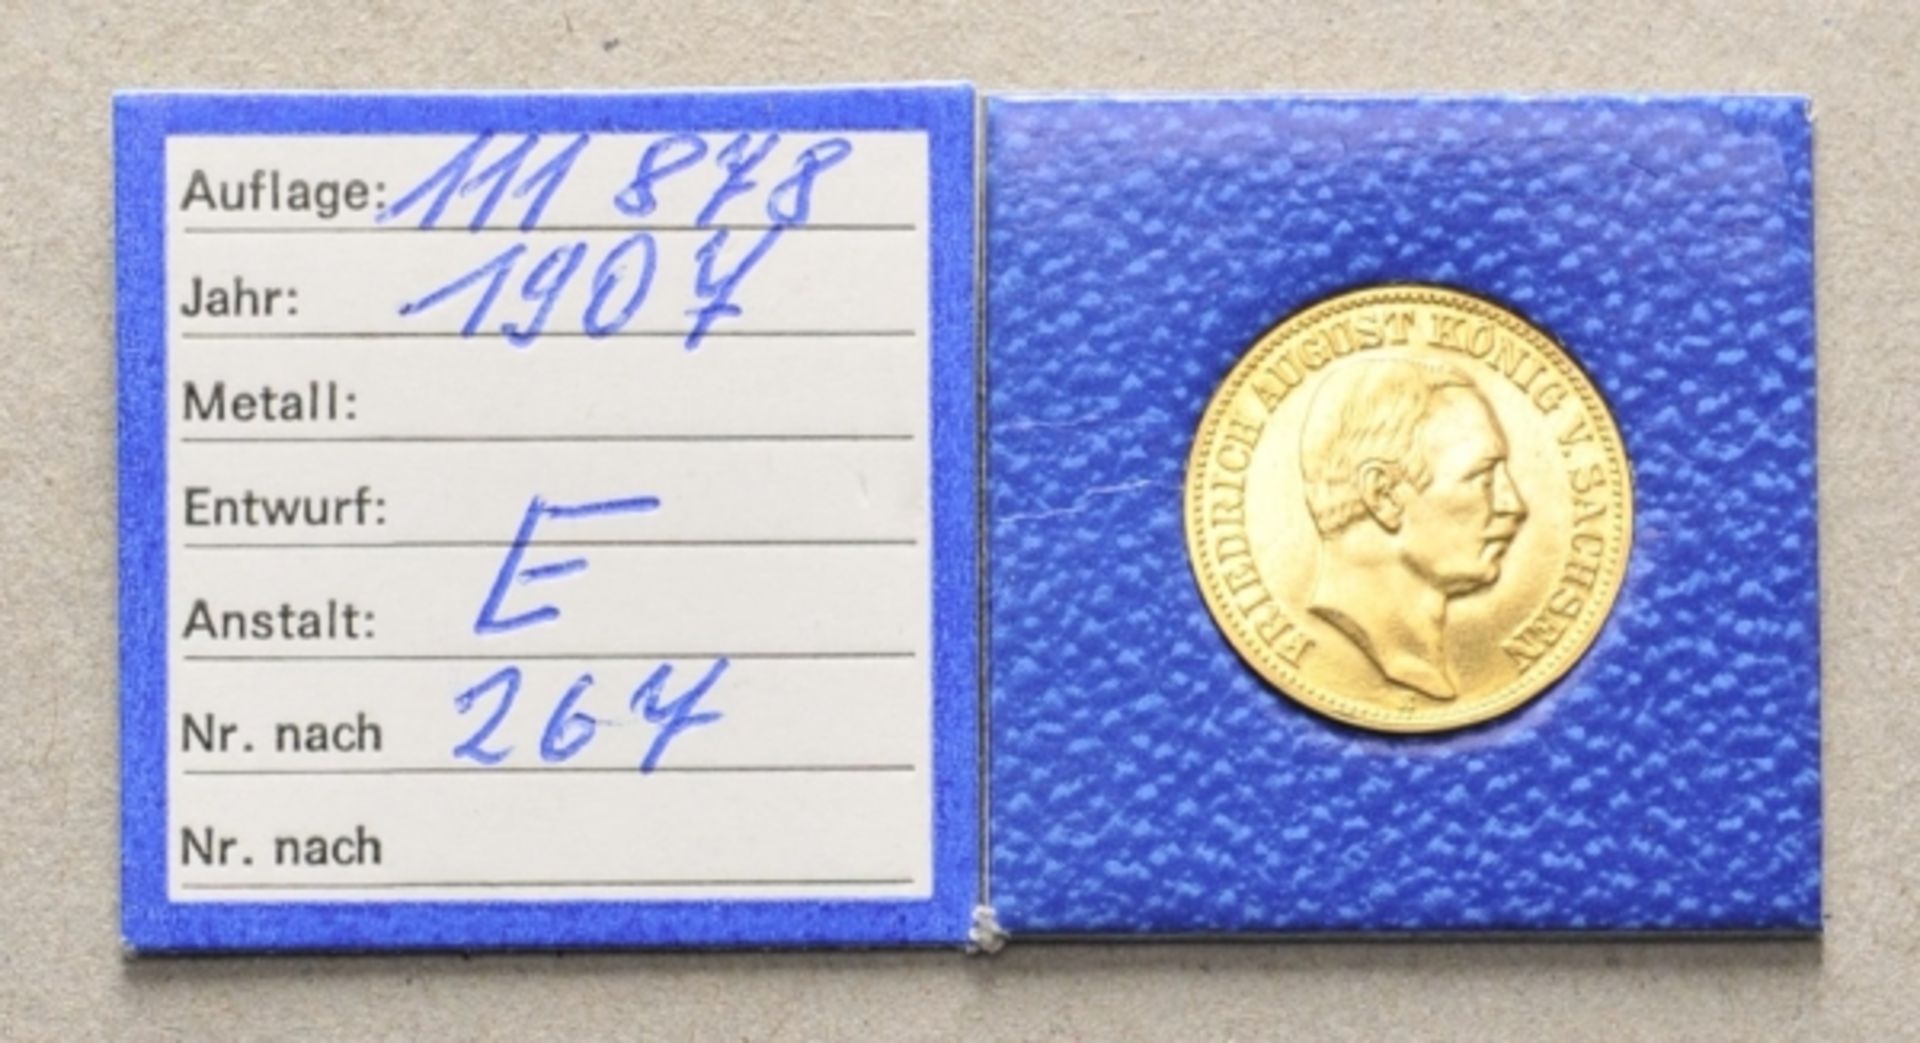 Sachsen: 10 Mark, 1907, E.Jäger 267.Zustand: IIAufrufpreis: 160 EUR

Saxony: 10 mark, 1907. E.Jaeger